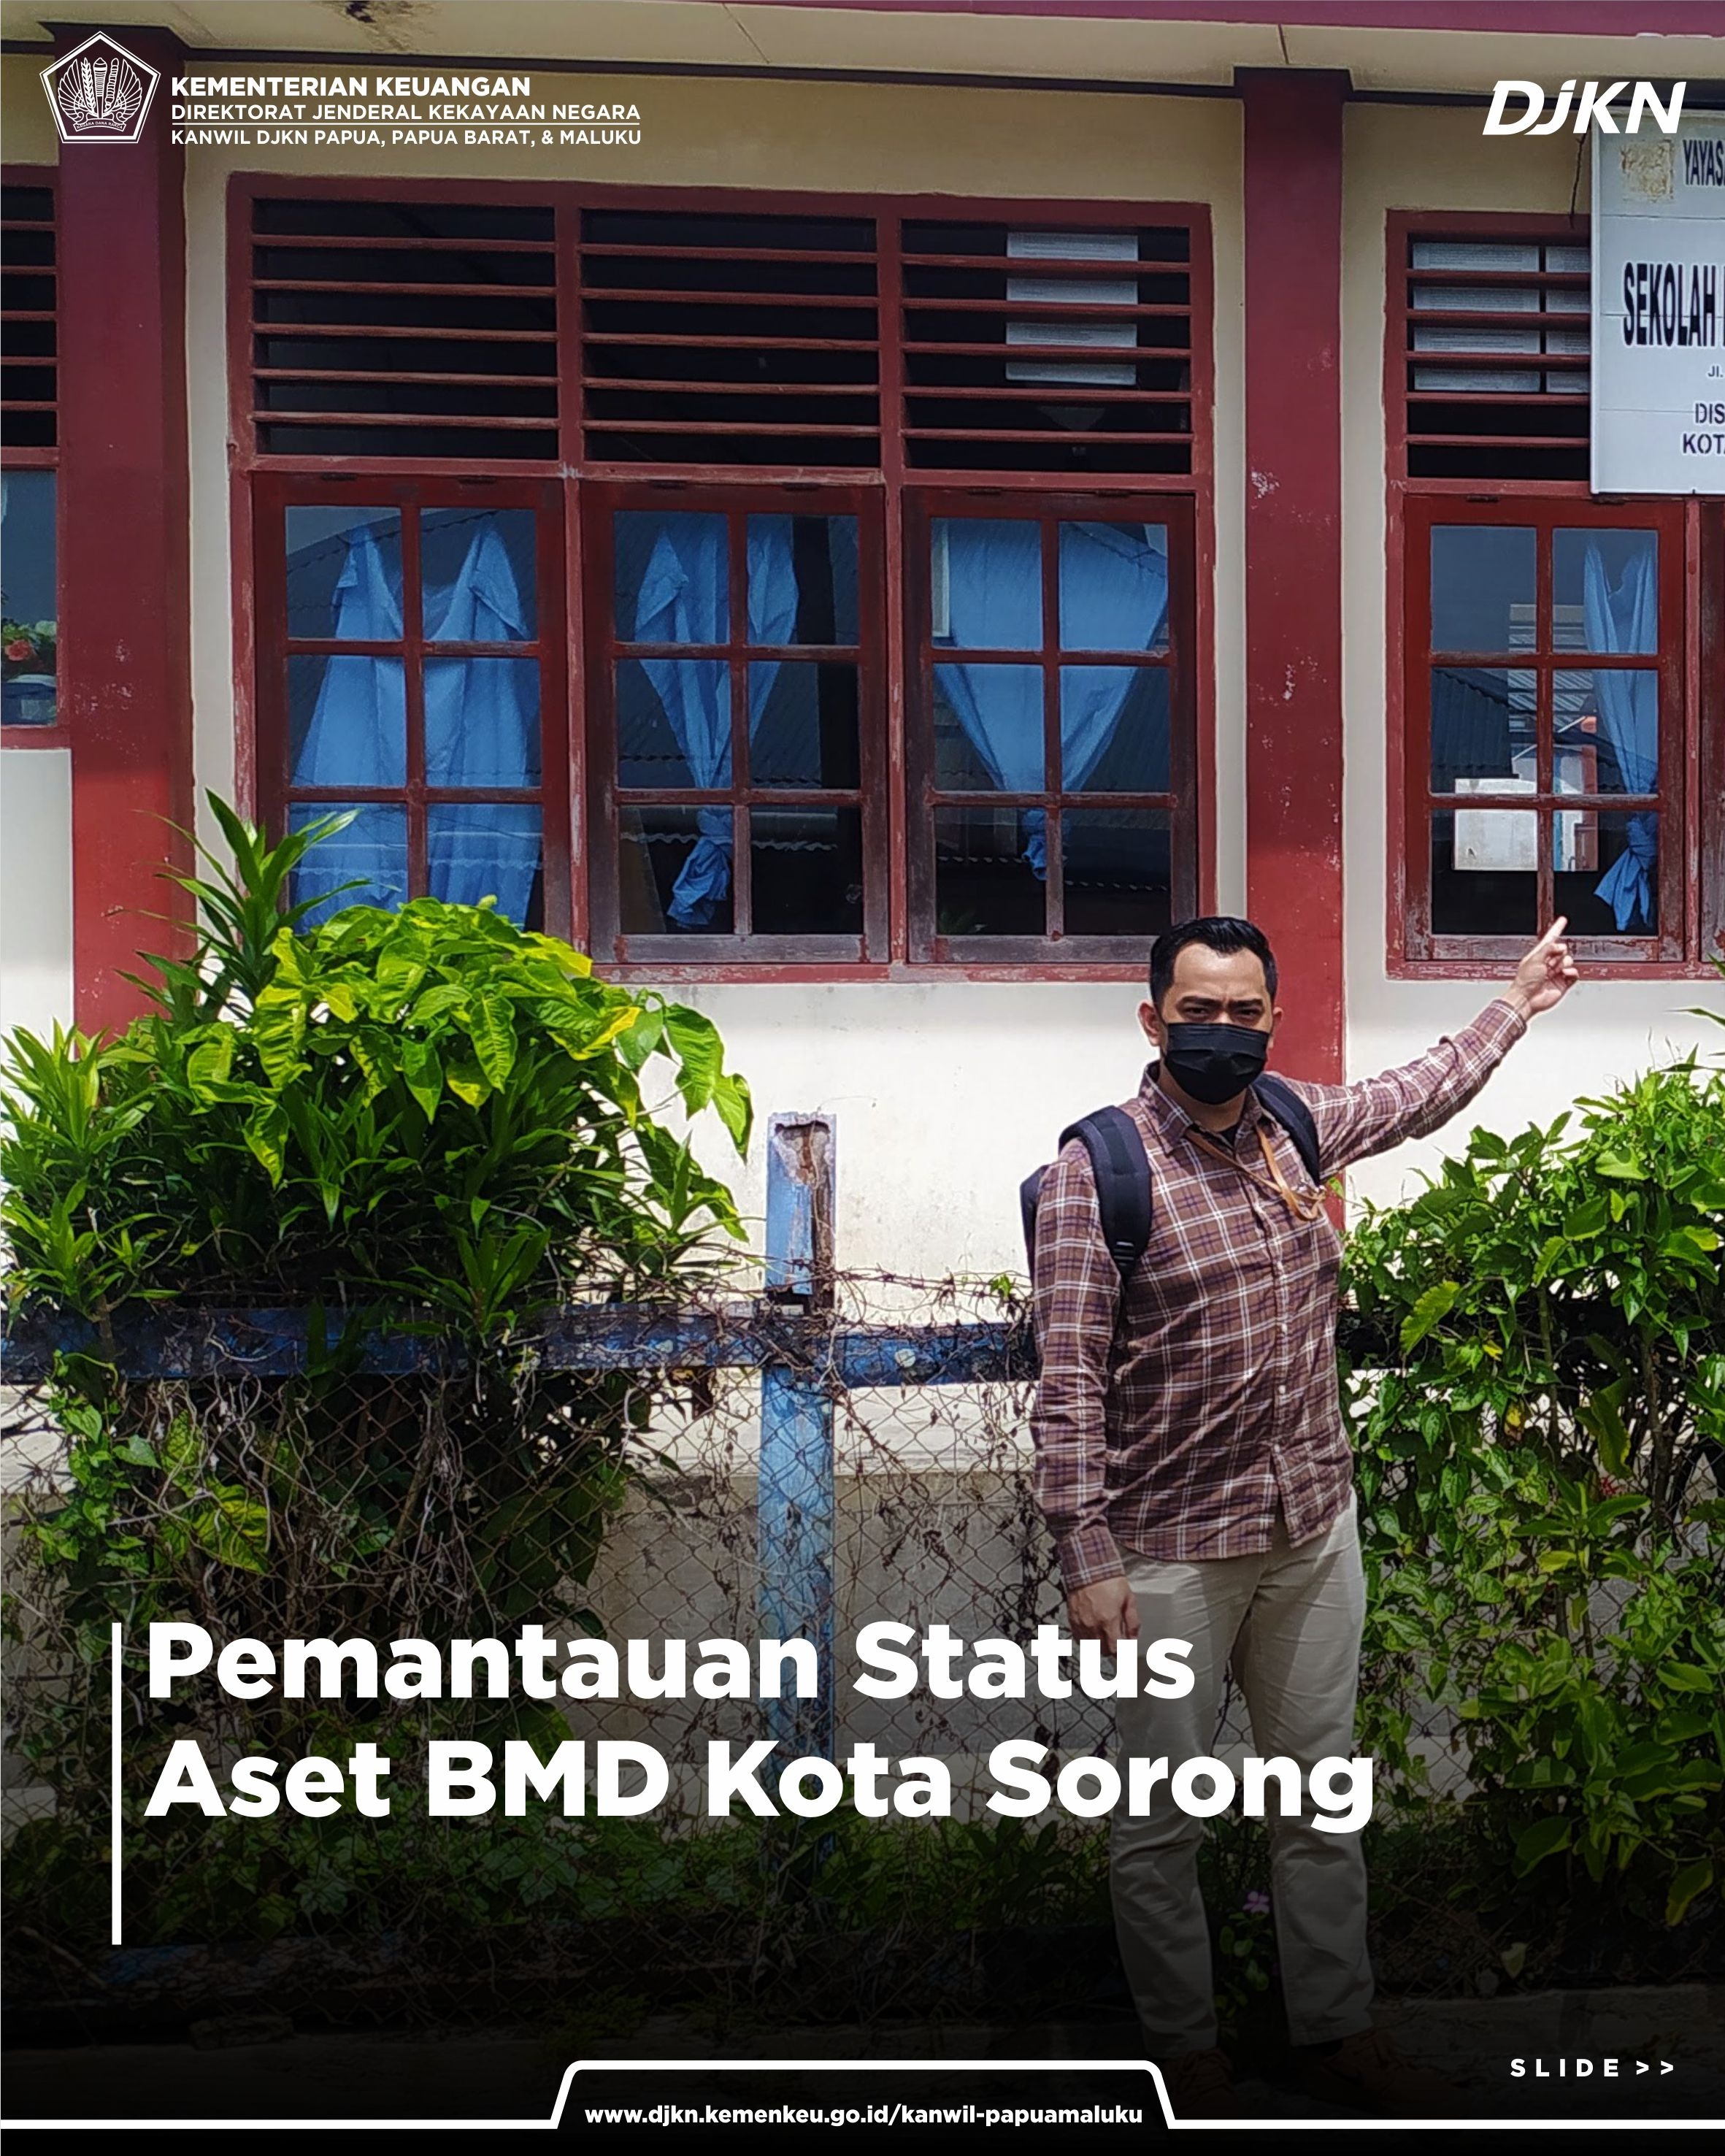 Pemantauan Status Aset BMD (Barang Milik Daerah) Kota Sorong